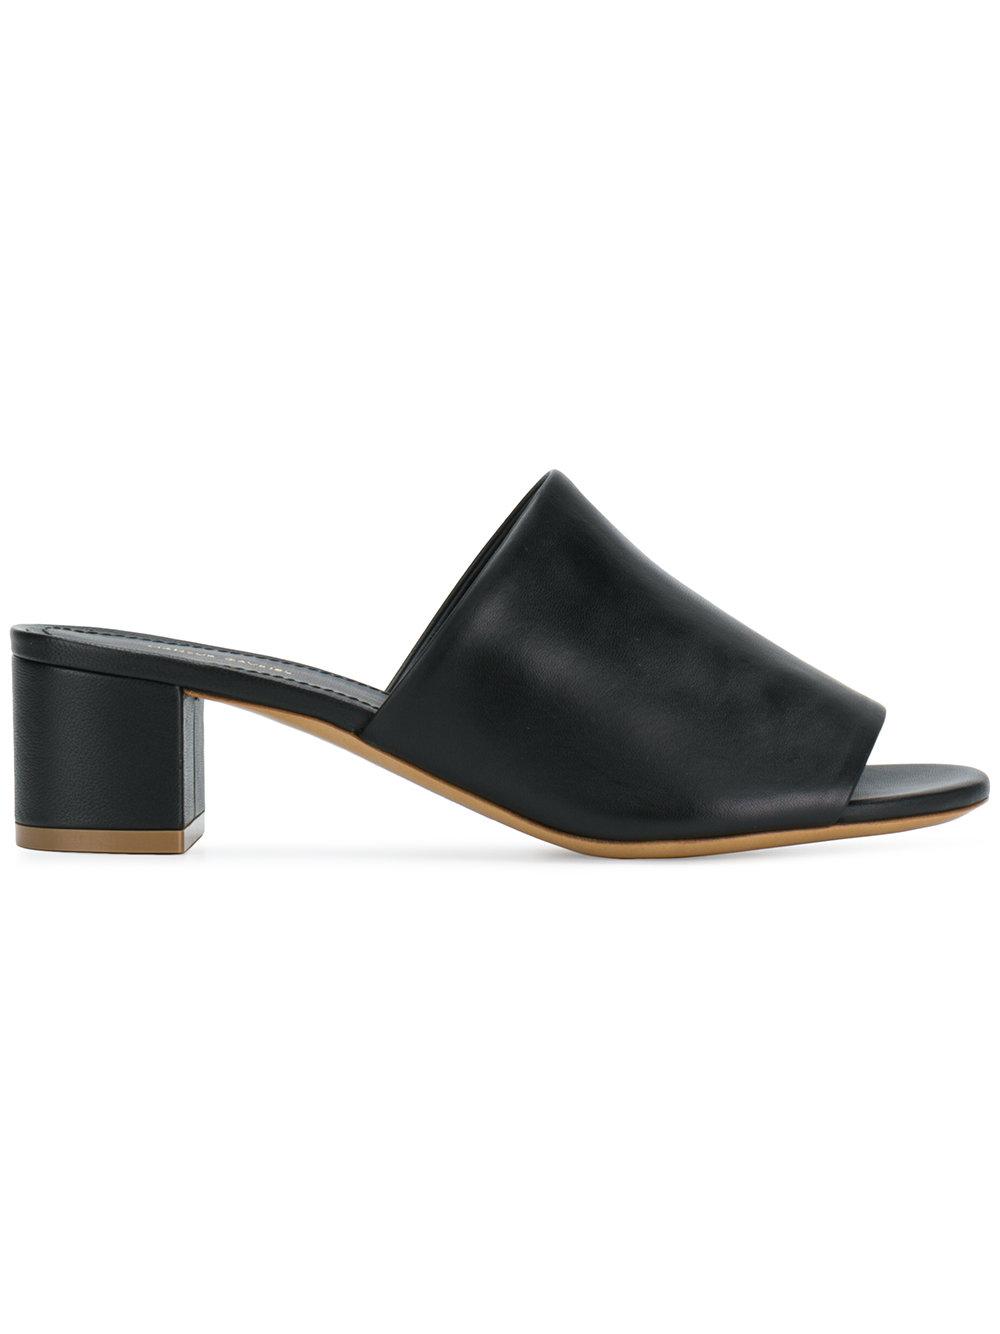 18 Simple Black Low-Heel Sandals | Who What Wear